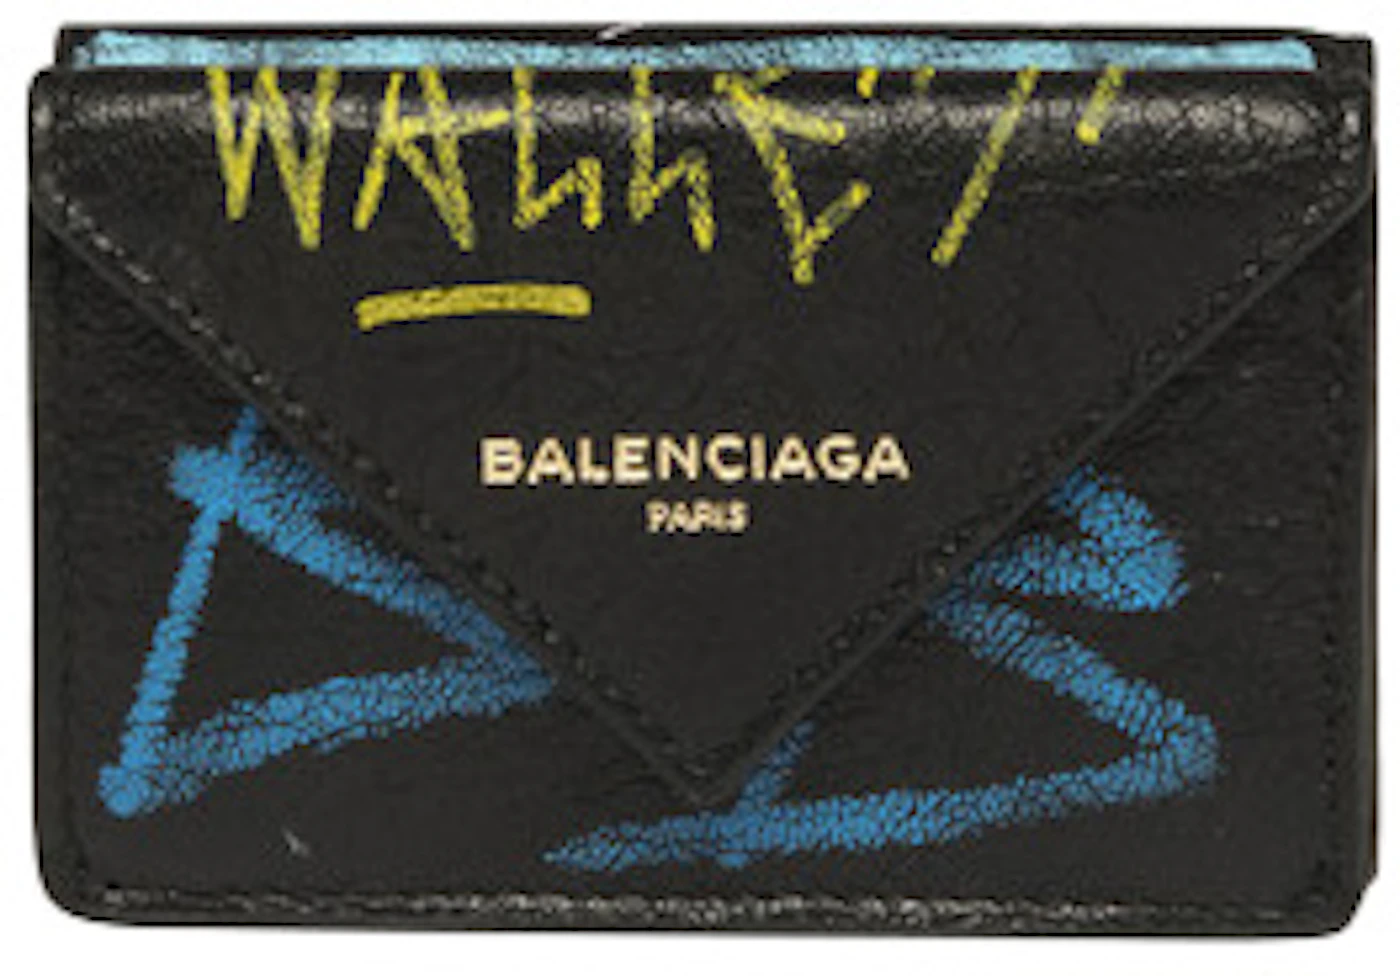 Balenciaga Papier Wallet Graffiti Mini in Lambskin Leather with - JP